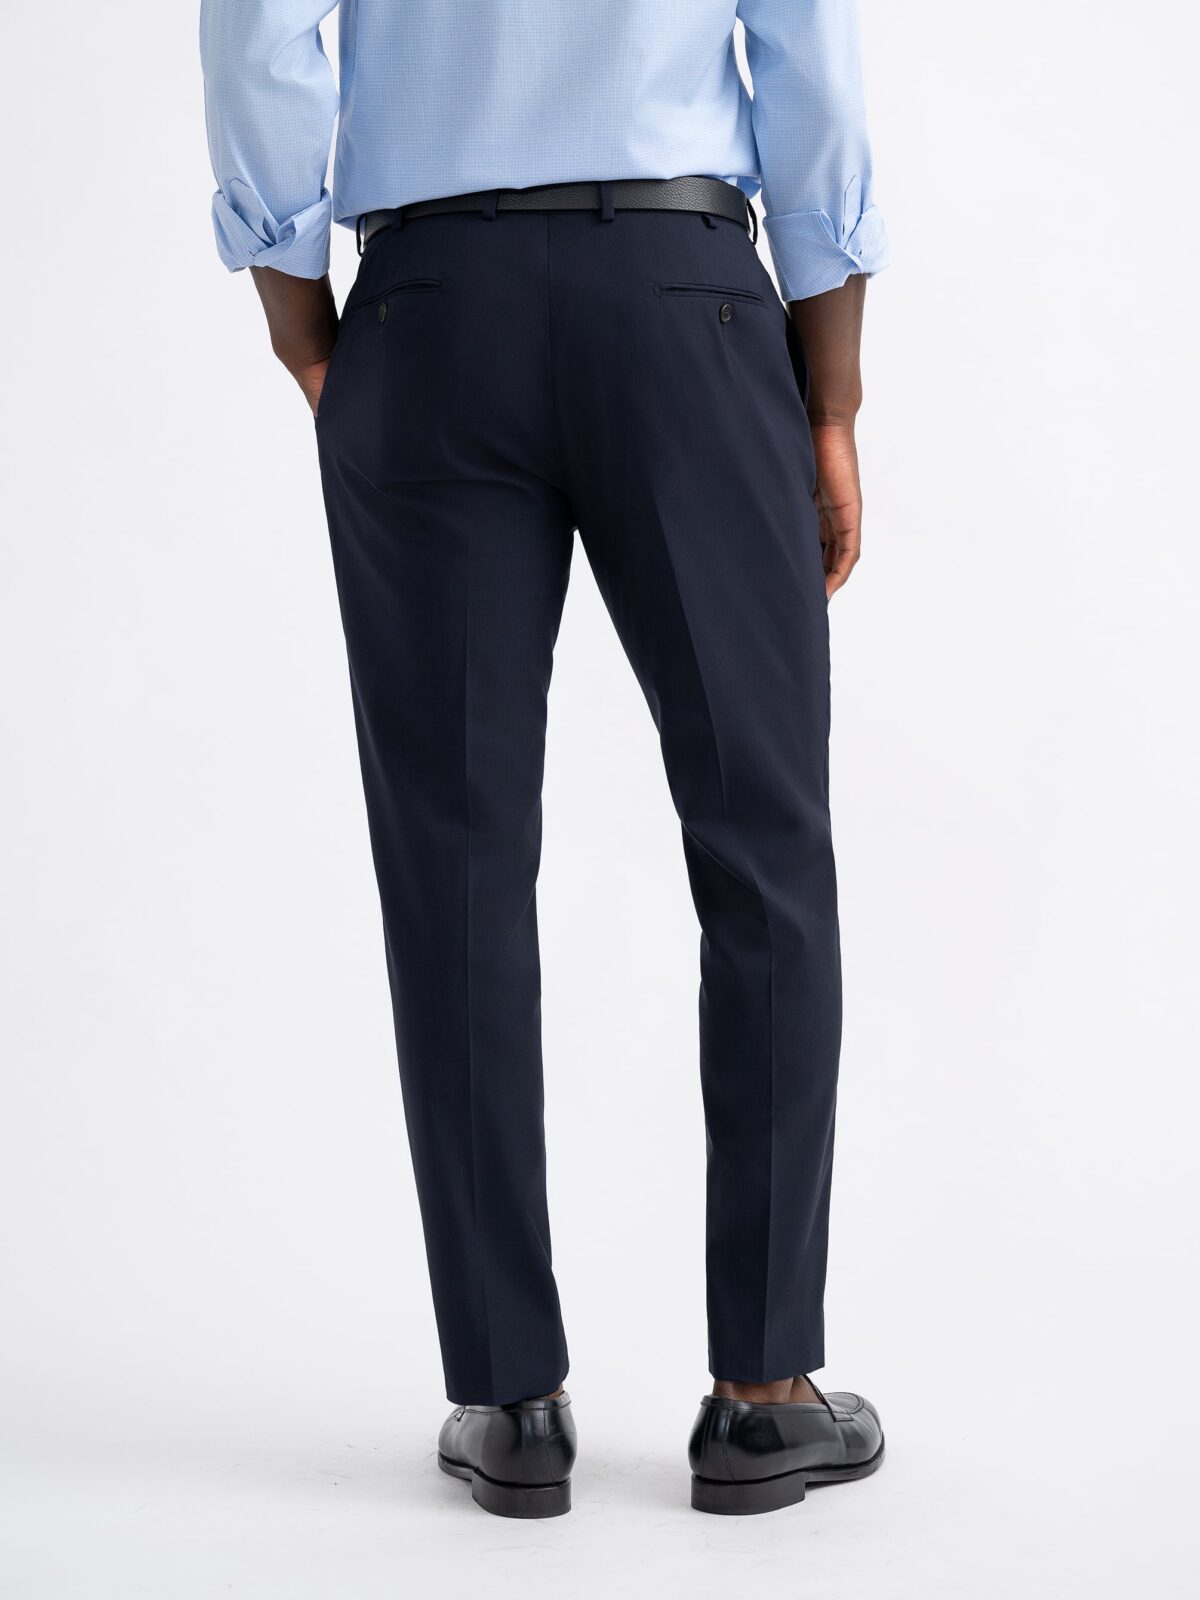 Navy Birdseye Wool Stretch Dress Pant - Custom Fit Tailored Clothing